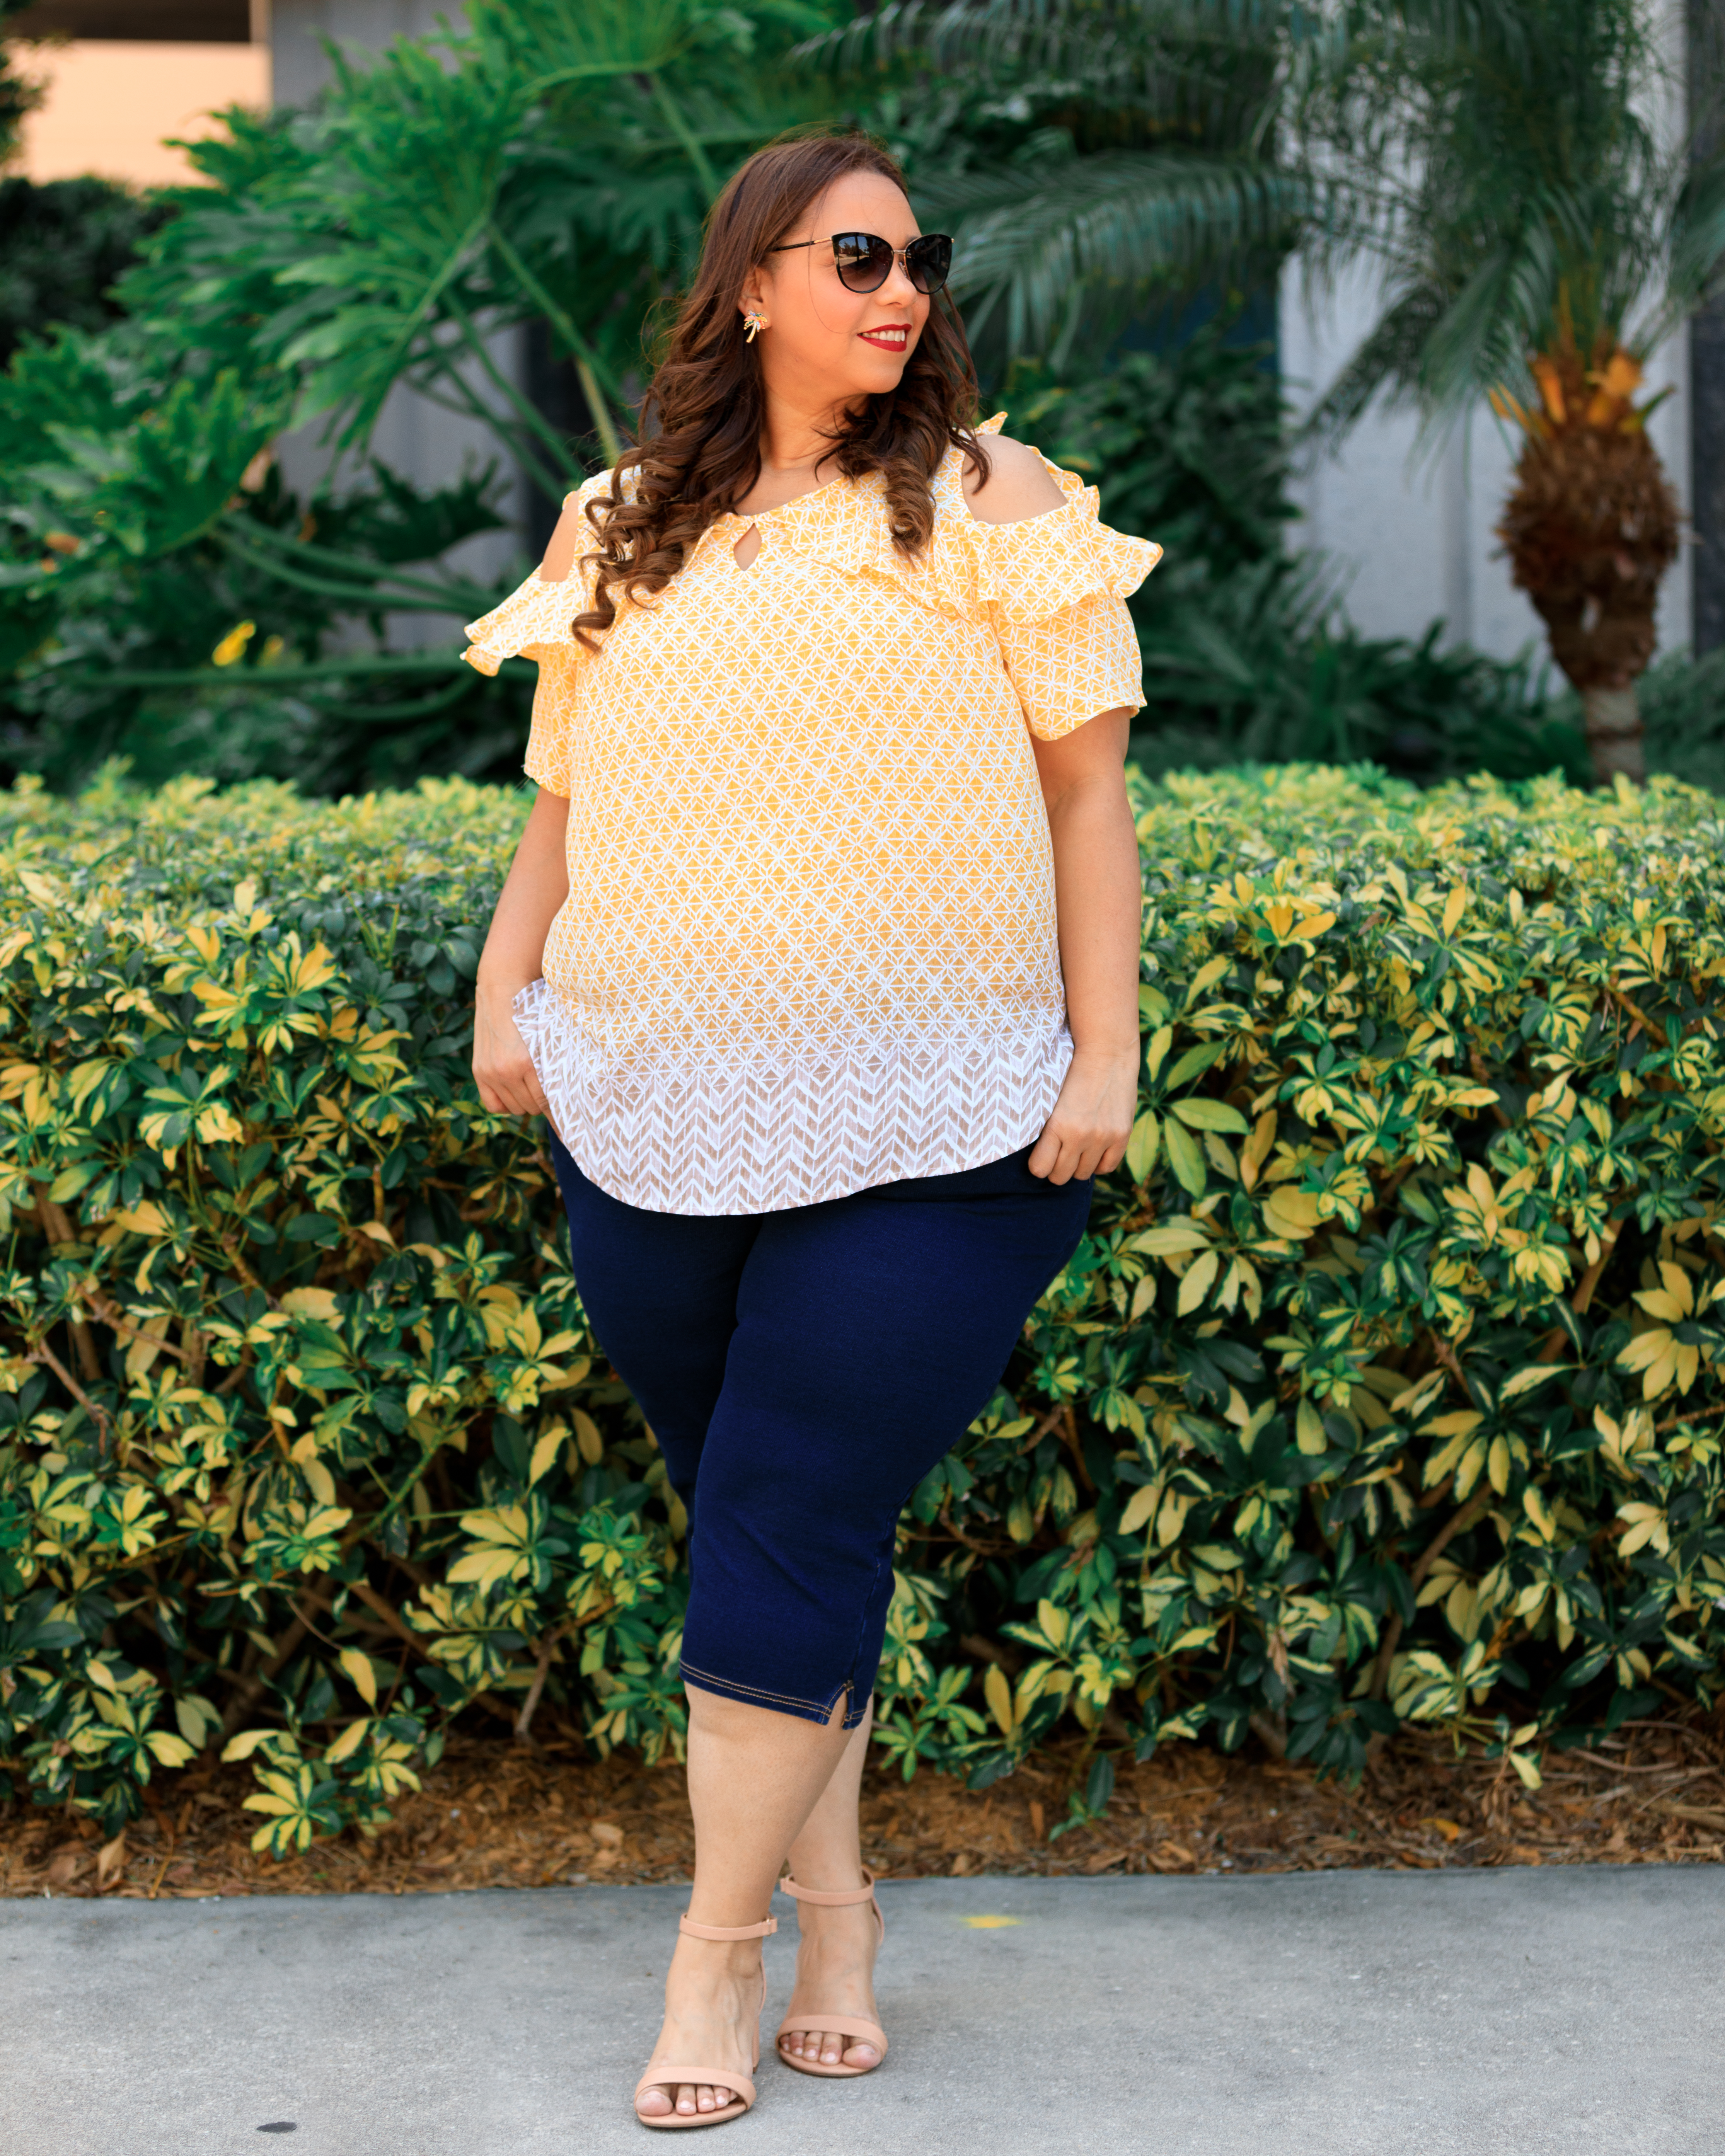 Tampa Fashion blogger Farrah Estrella